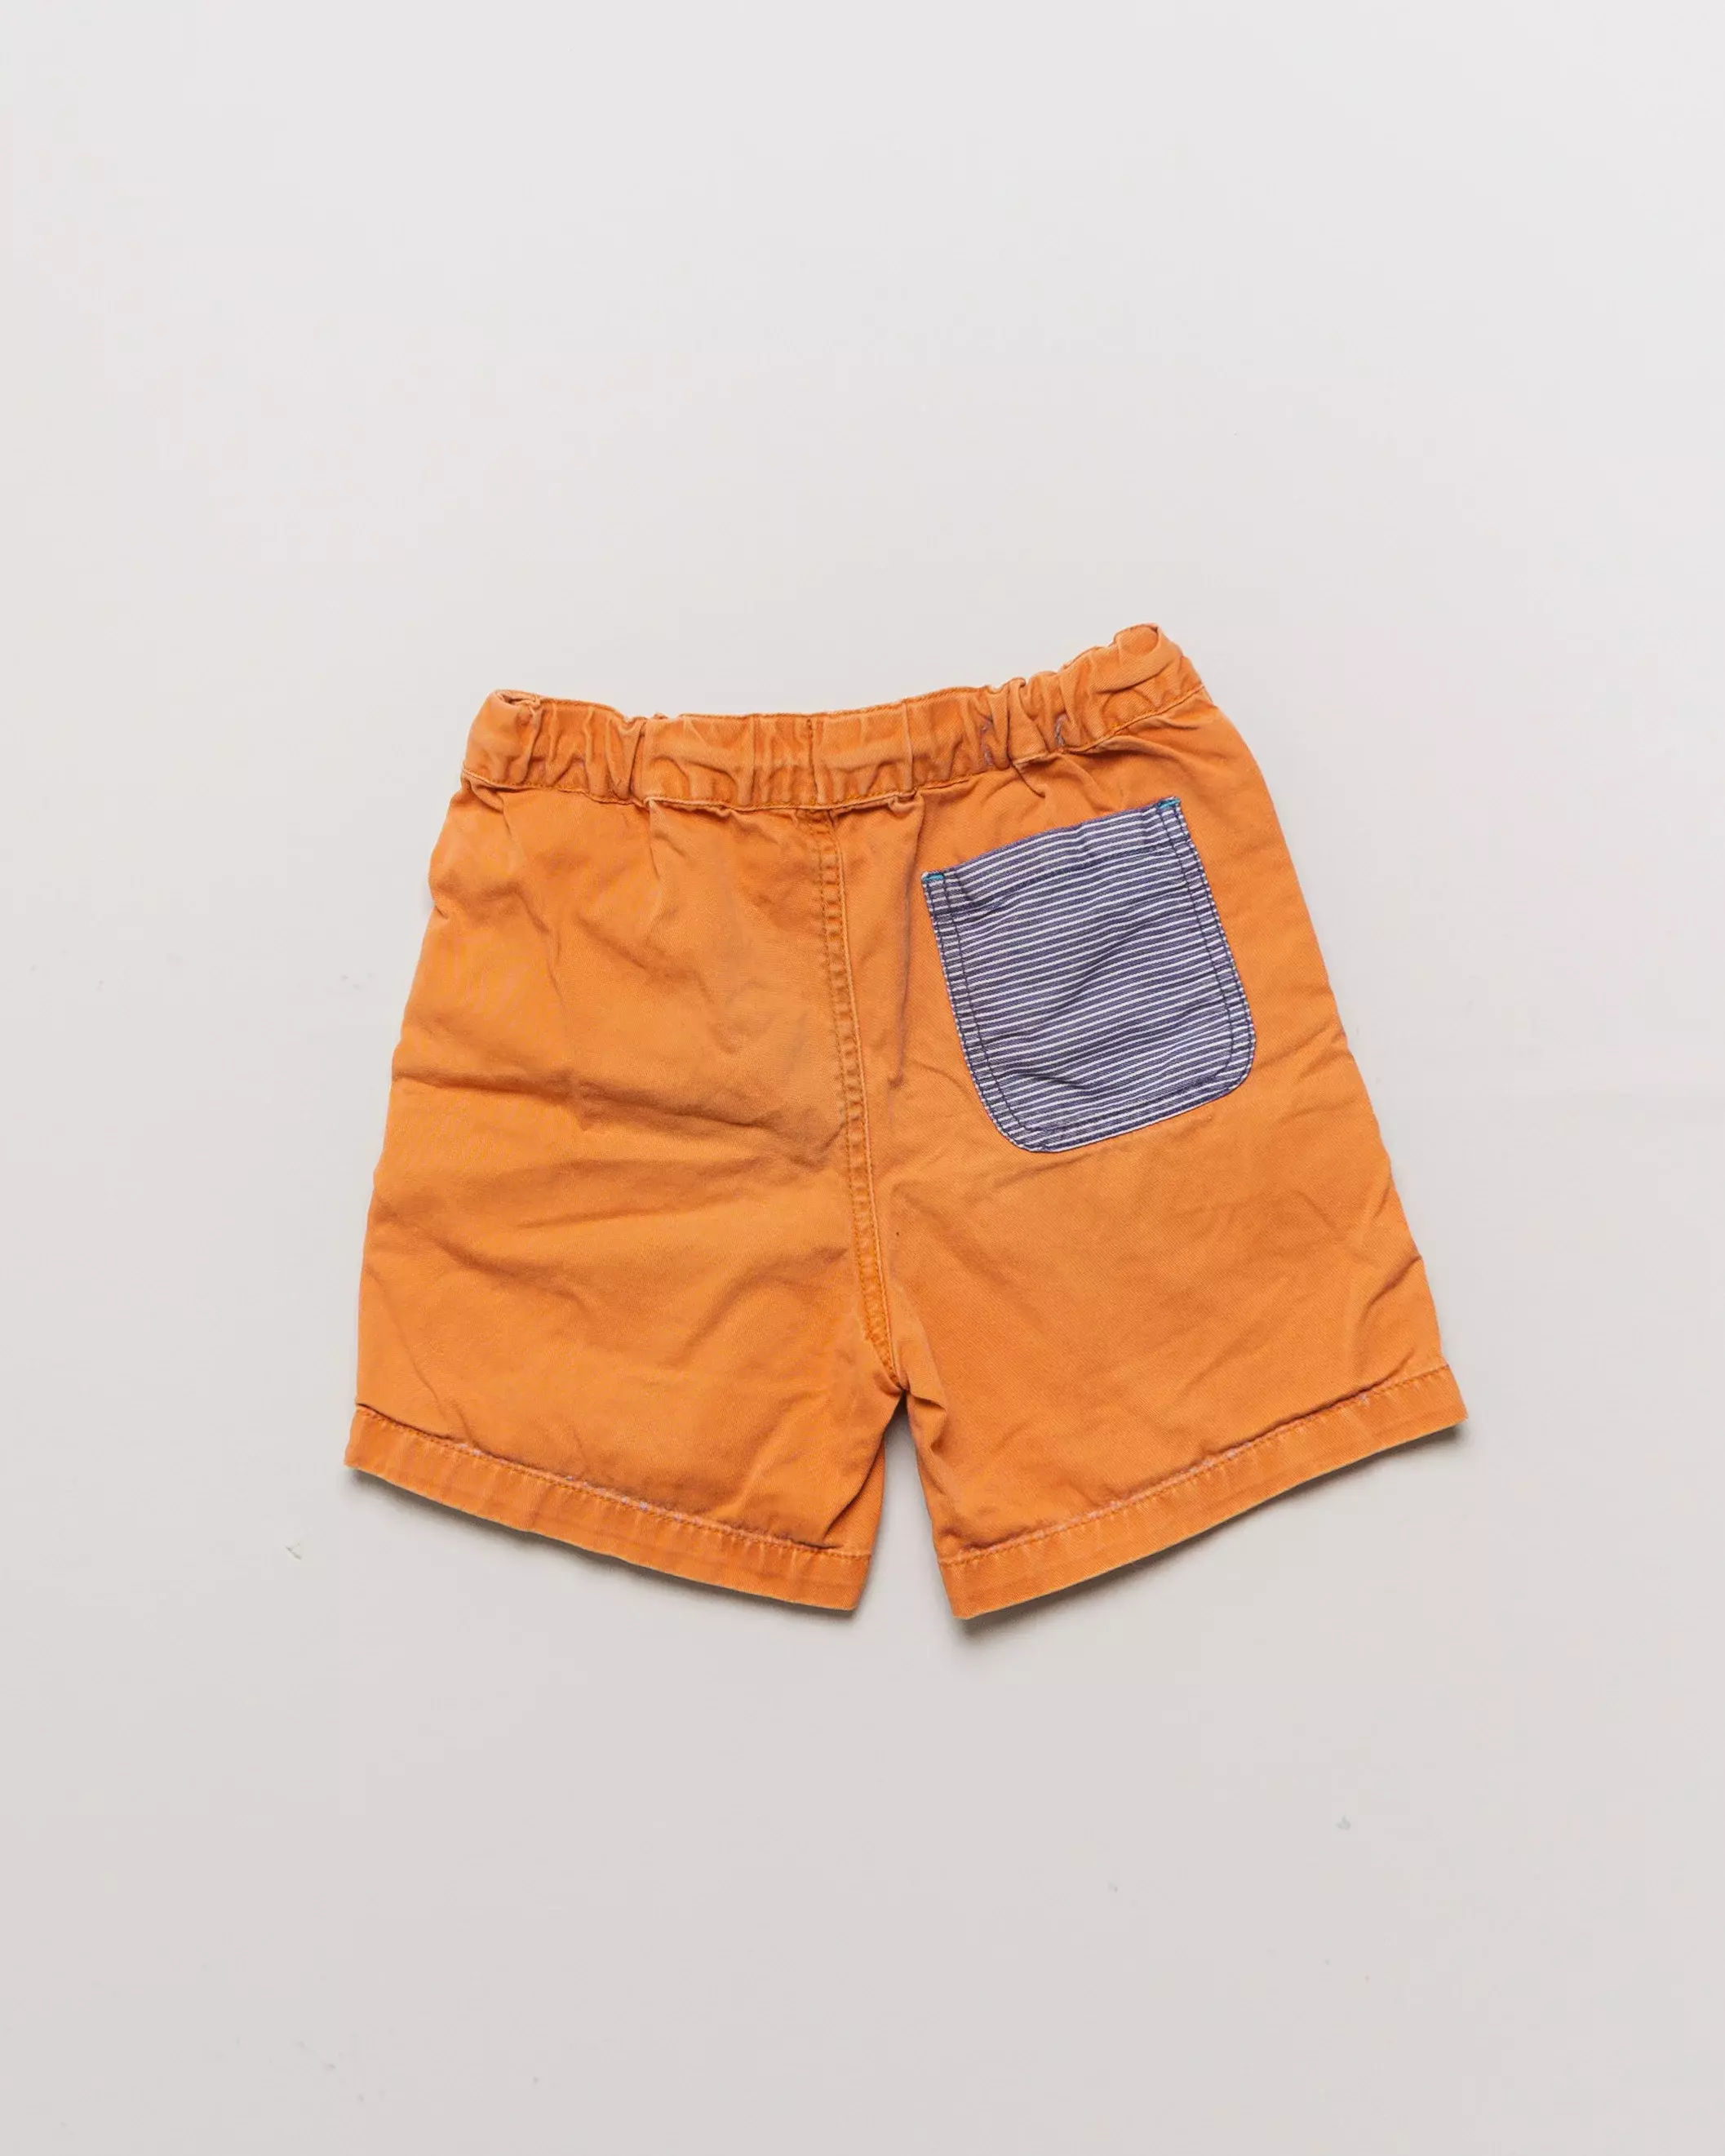 Kurze Hose in Gr. 116/122 – mini Boden orange Jeans 6 Jahre